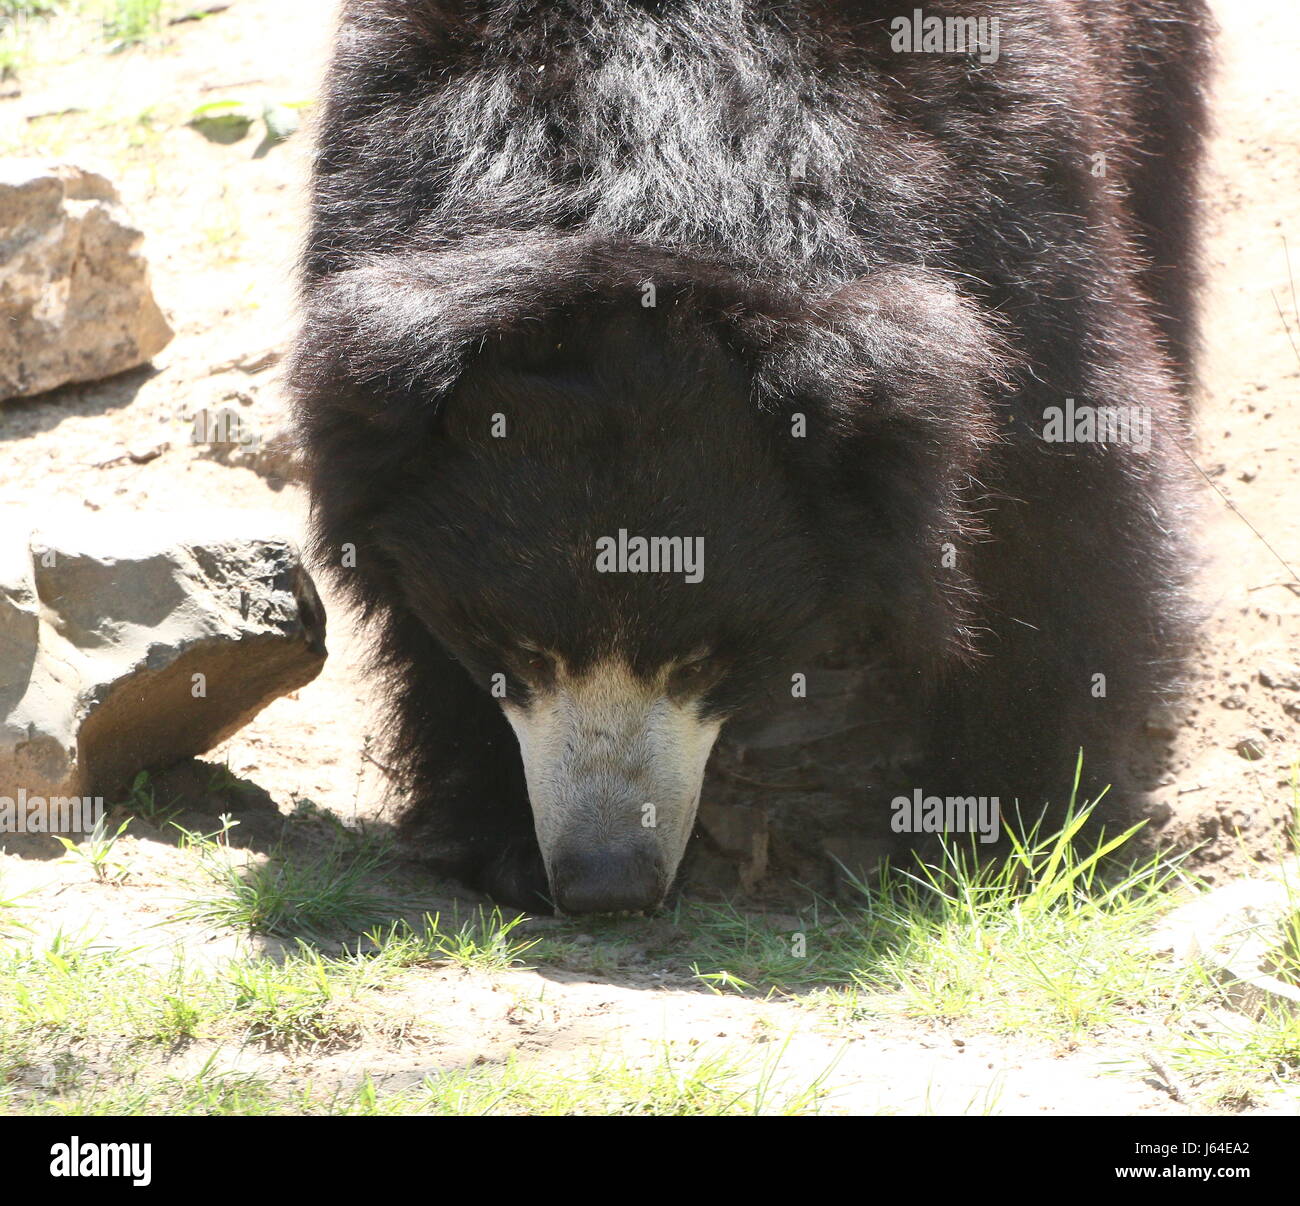 India oso perezoso (Melursus ursinus, Ursus ursinus), también conocido como oso Labiated Asiática. Foto de stock